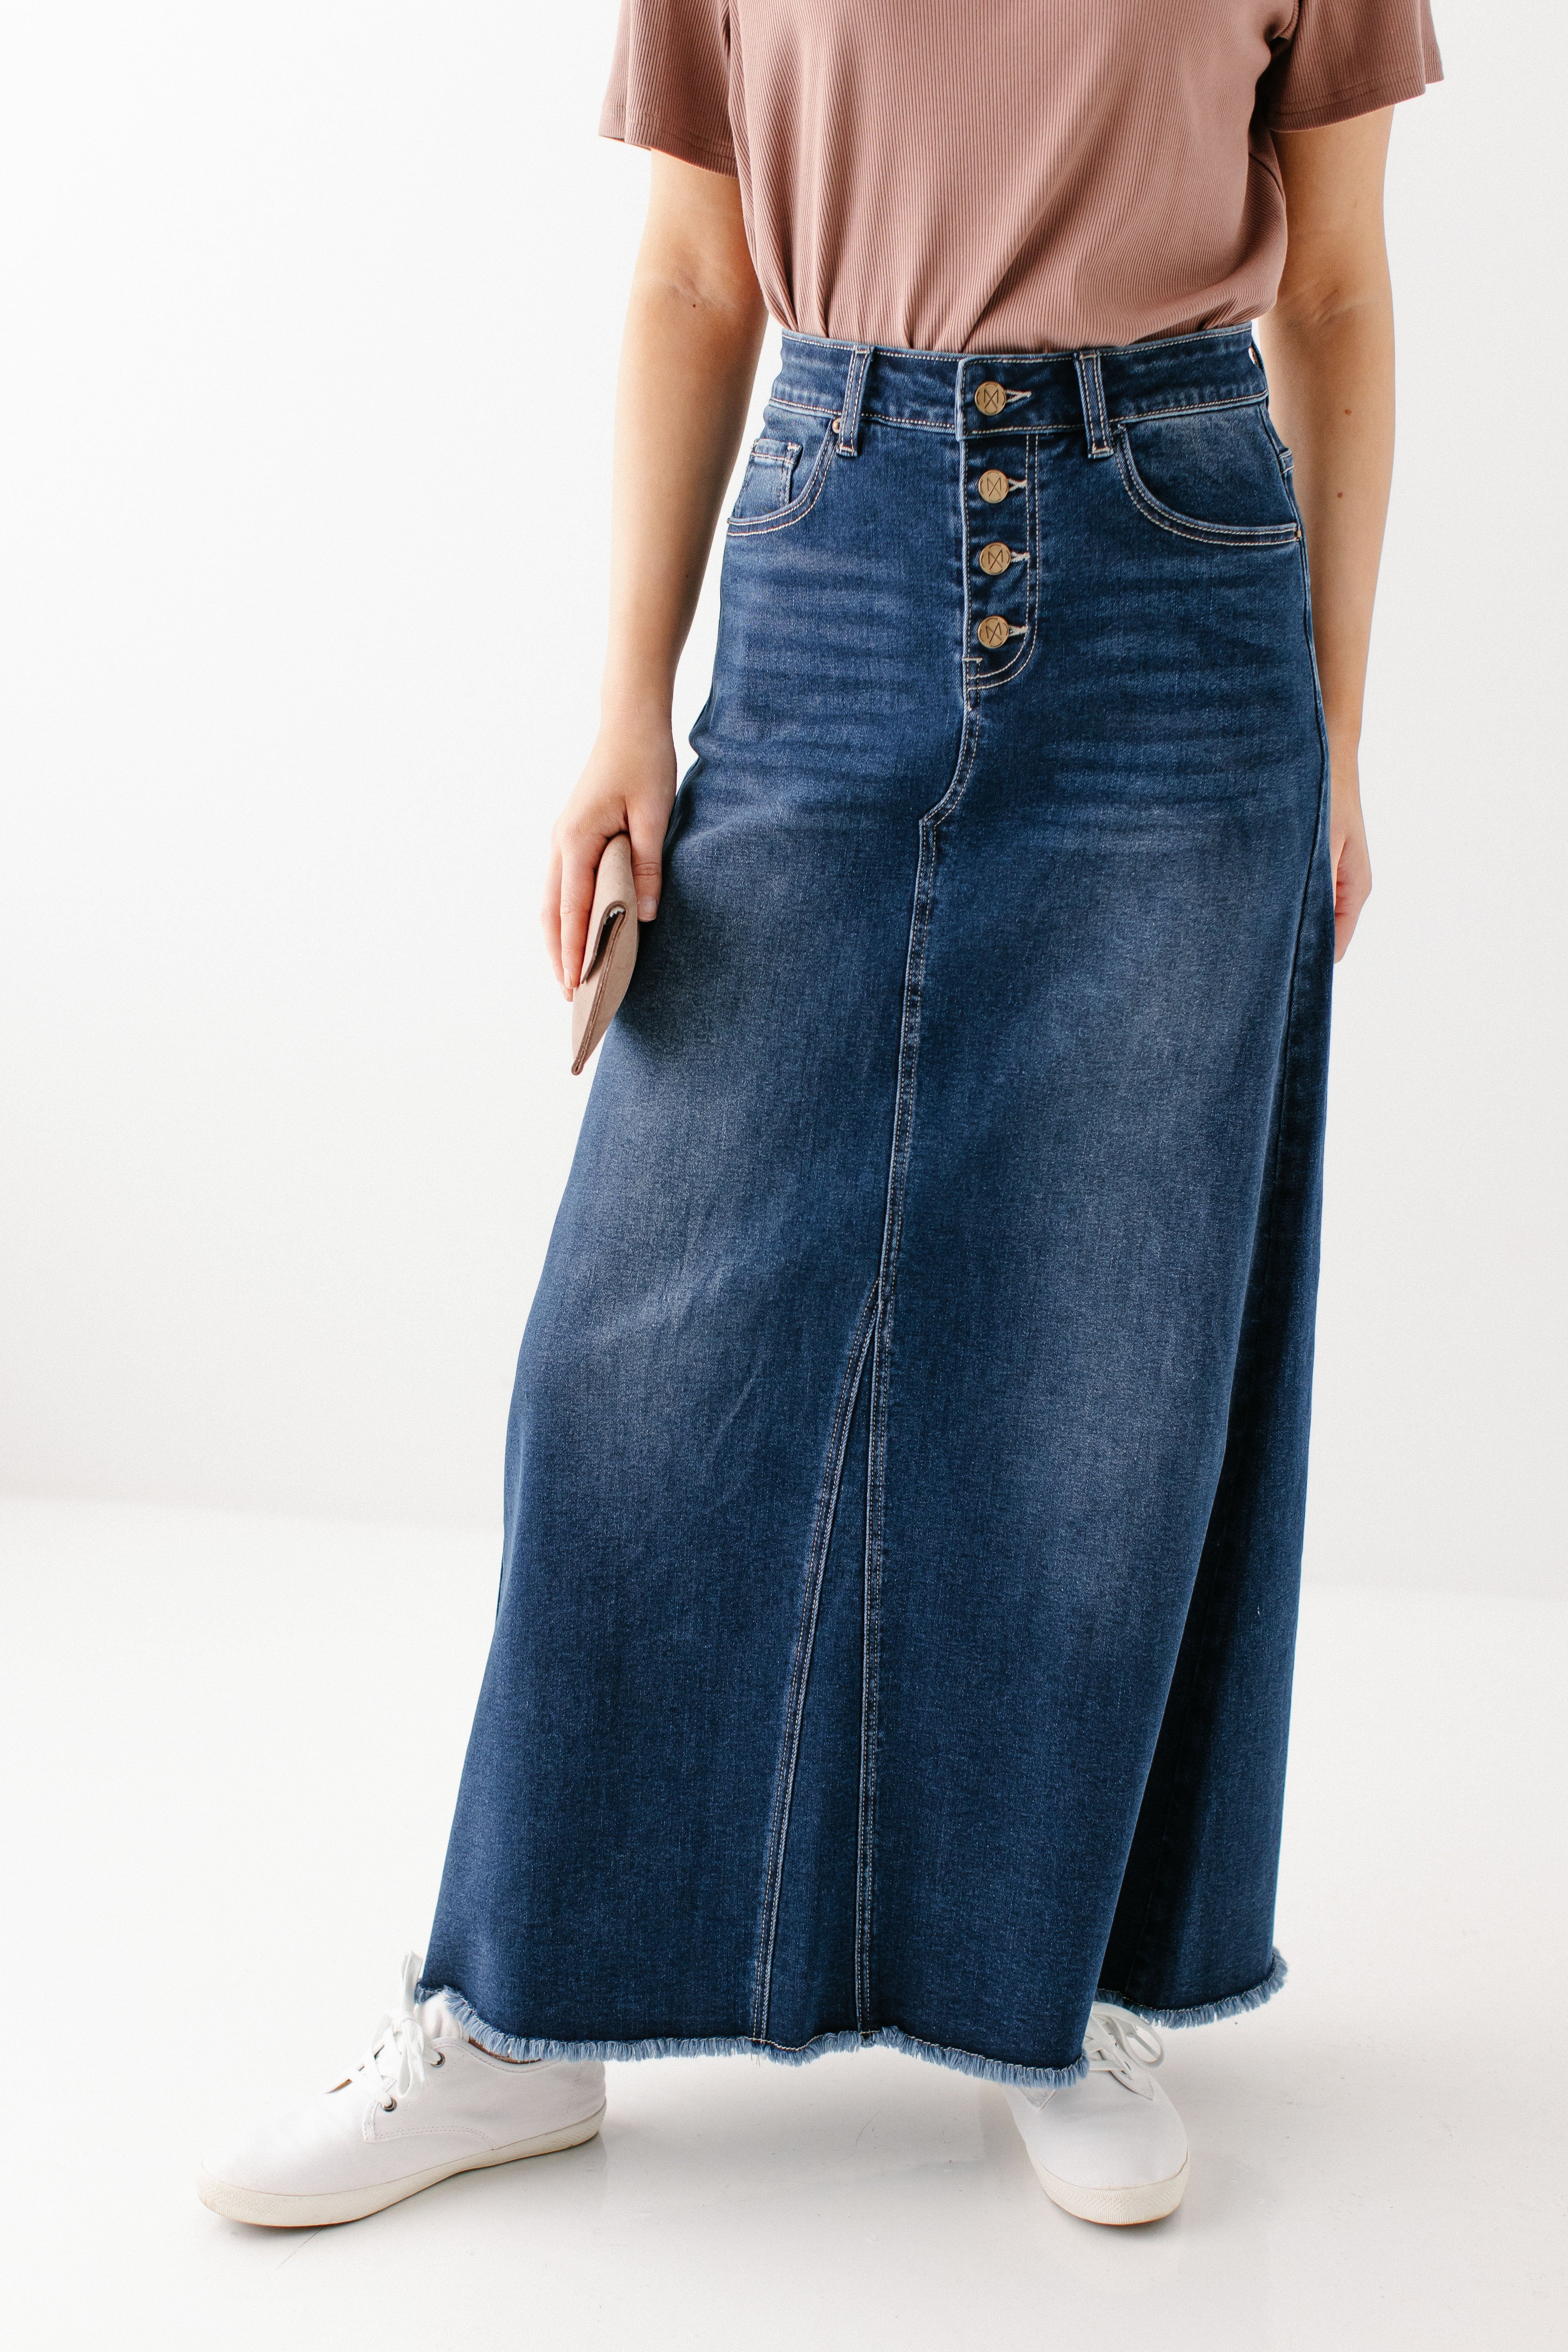 Amazon.com: lisenraIn Women Long Denim Skirt Front Slit Maxi Skirt Y2K  Fashion Streetwear High Waist Jean Skirt with Pockets (Raw Hem-Dark Blue,  S) : Clothing, Shoes & Jewelry